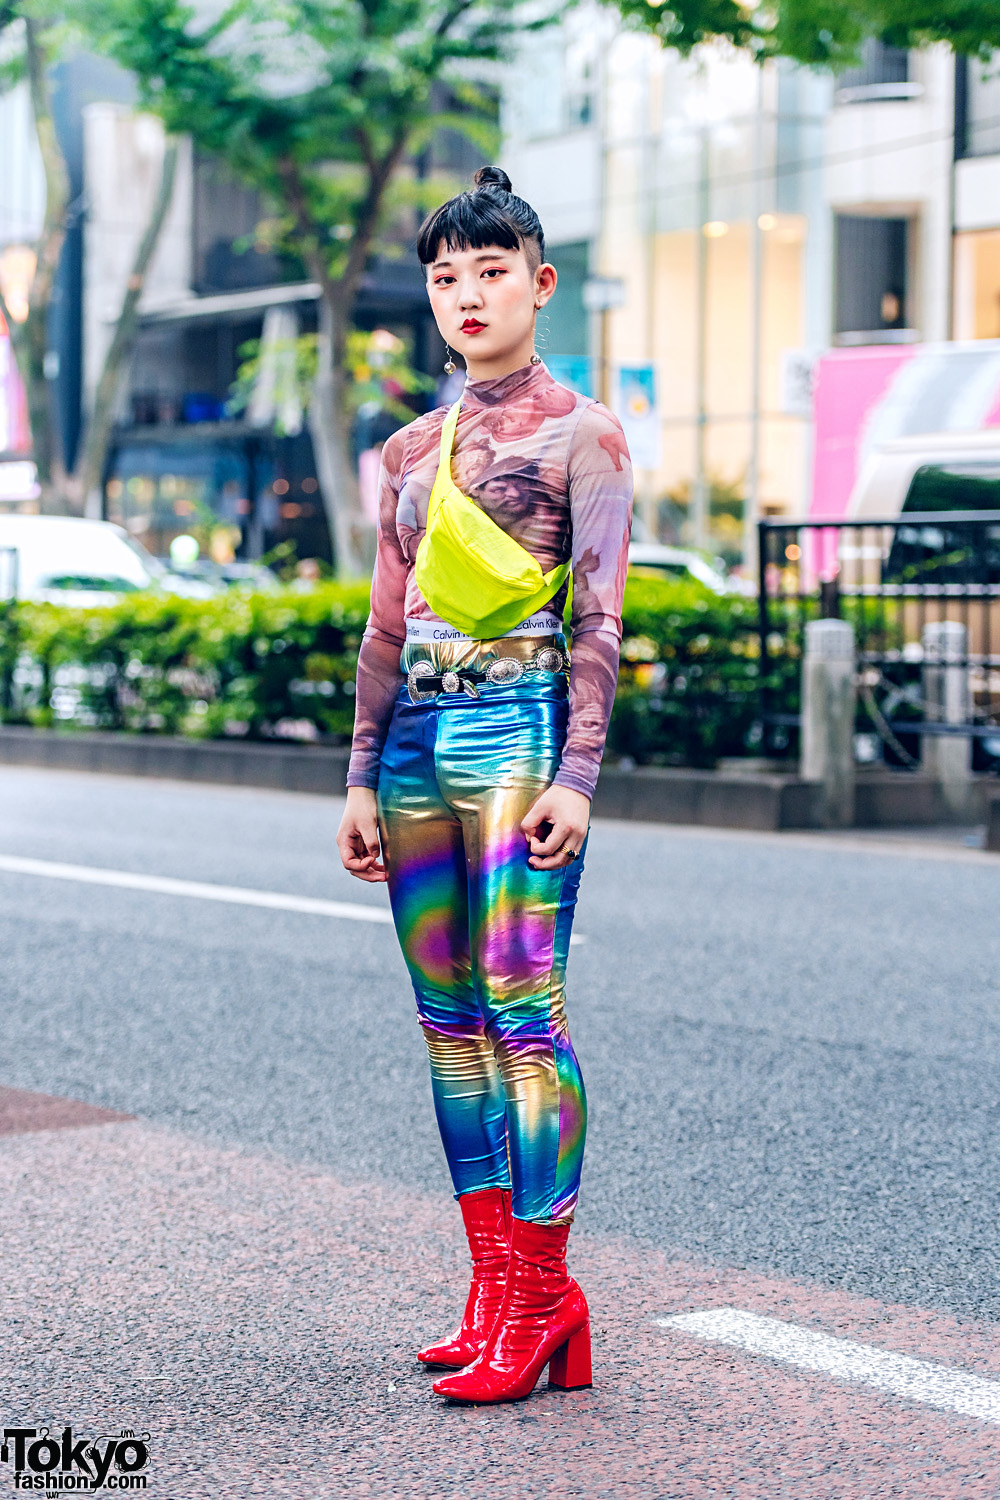 Harajuku Girl w/ Nodress Graphic Top, Metallic Pants, Neon Yellow Bag ...